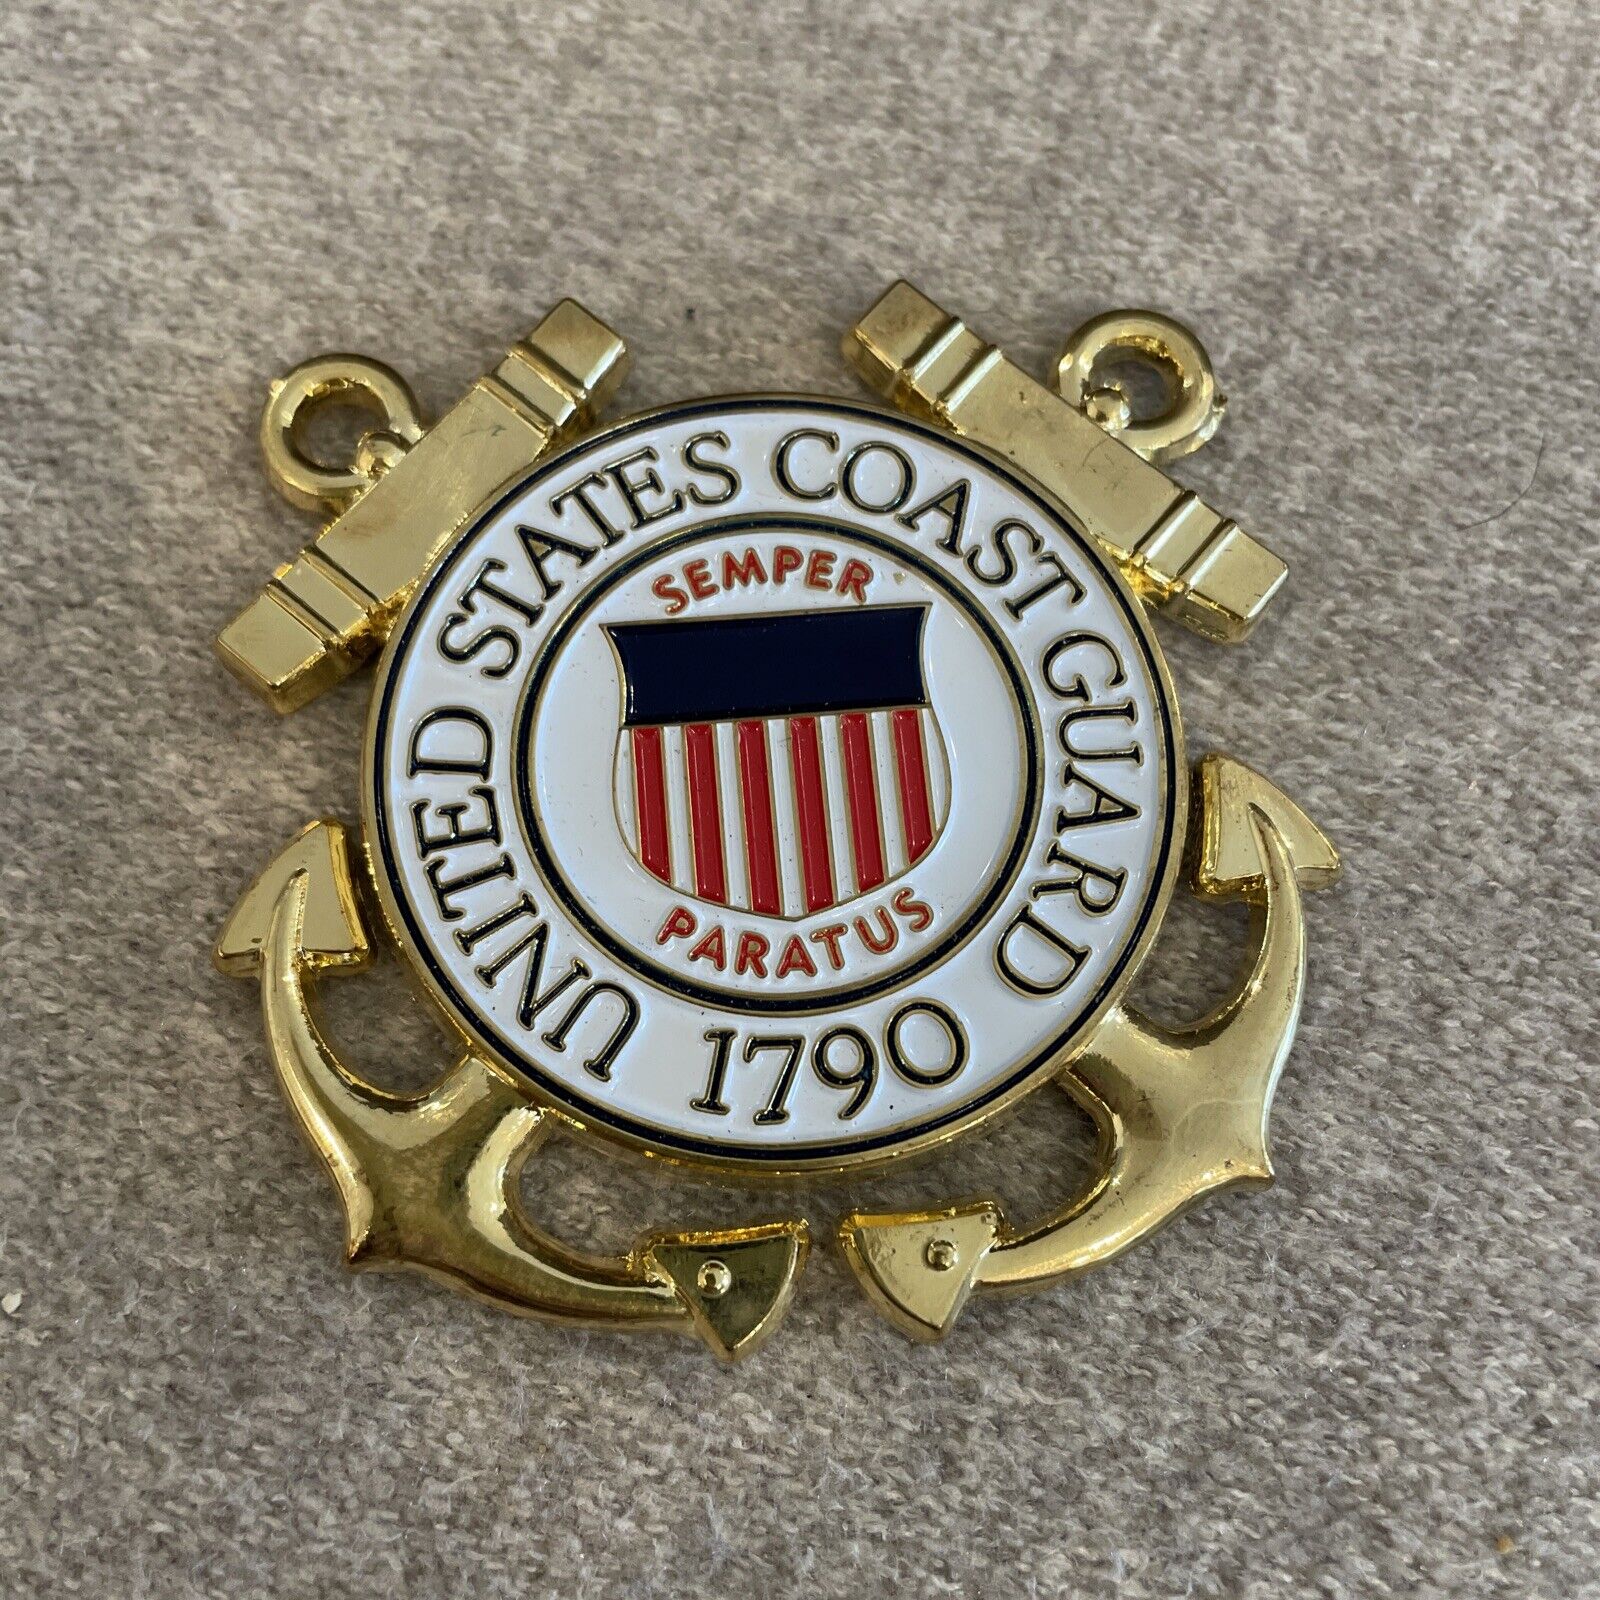 Vintage United States Coast Guard Emblem Semper Paratus 1790 Military 2.5”